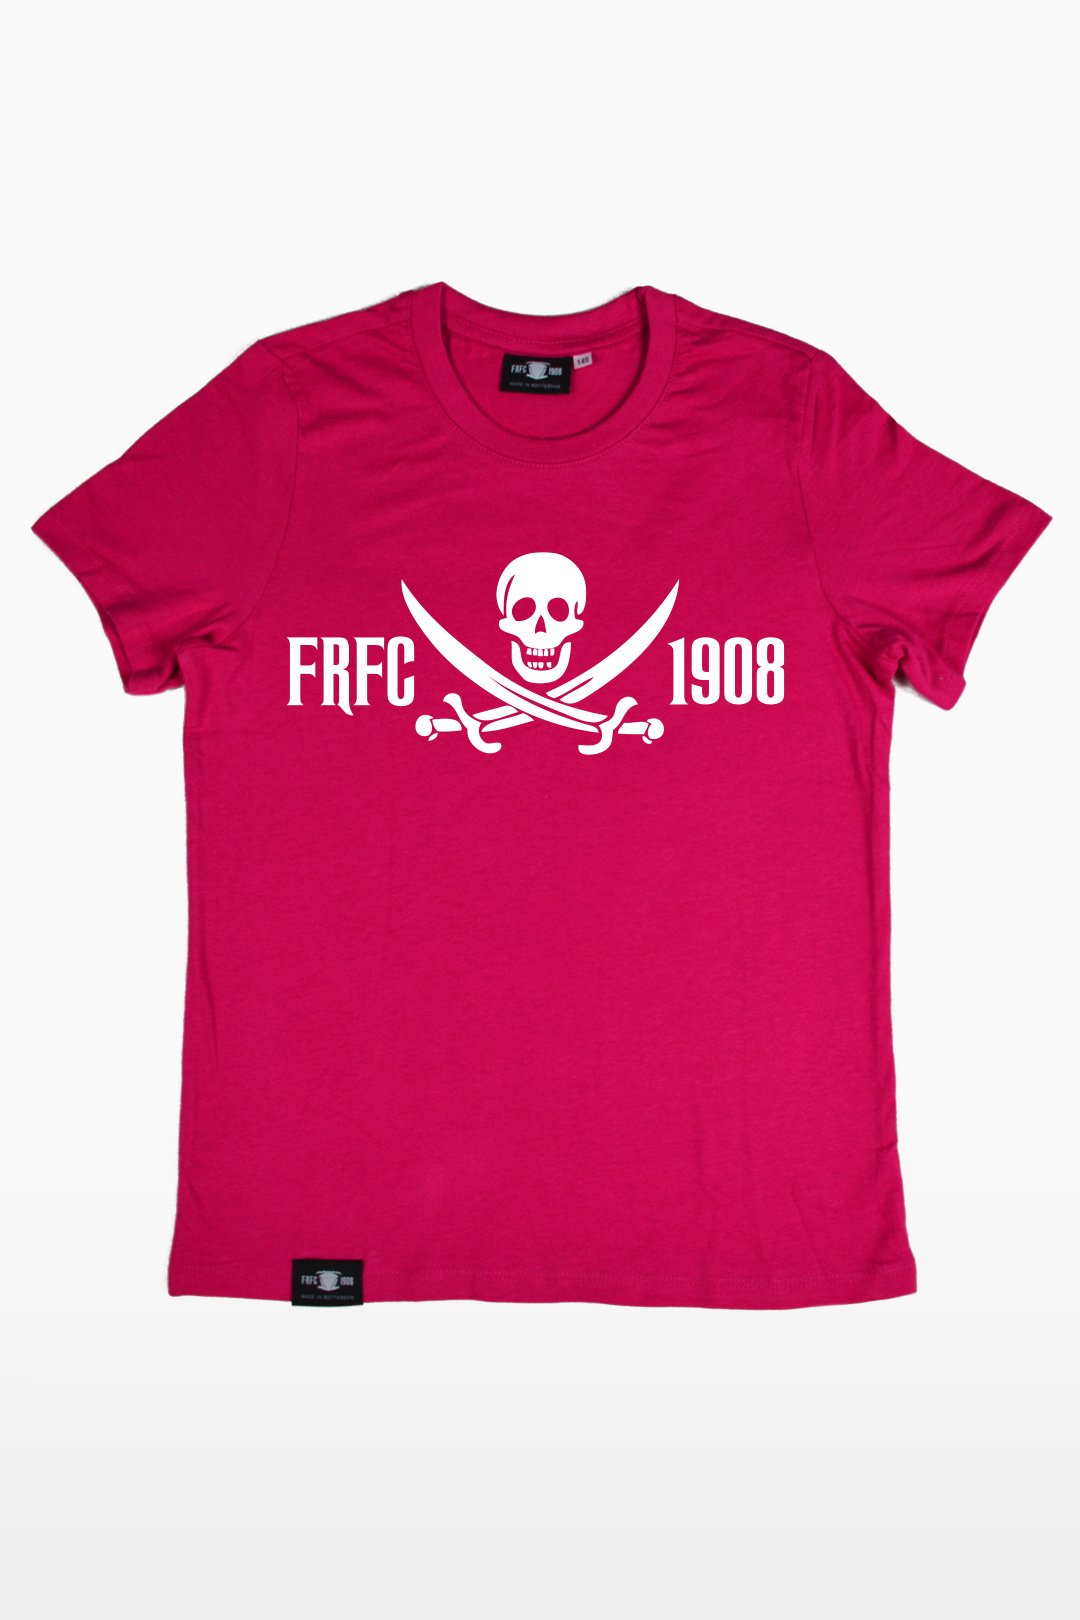 krab prachtig band FRFC1908 Kids Shirt - Roze - FRFC1908.nl Feyenoord Fanshop